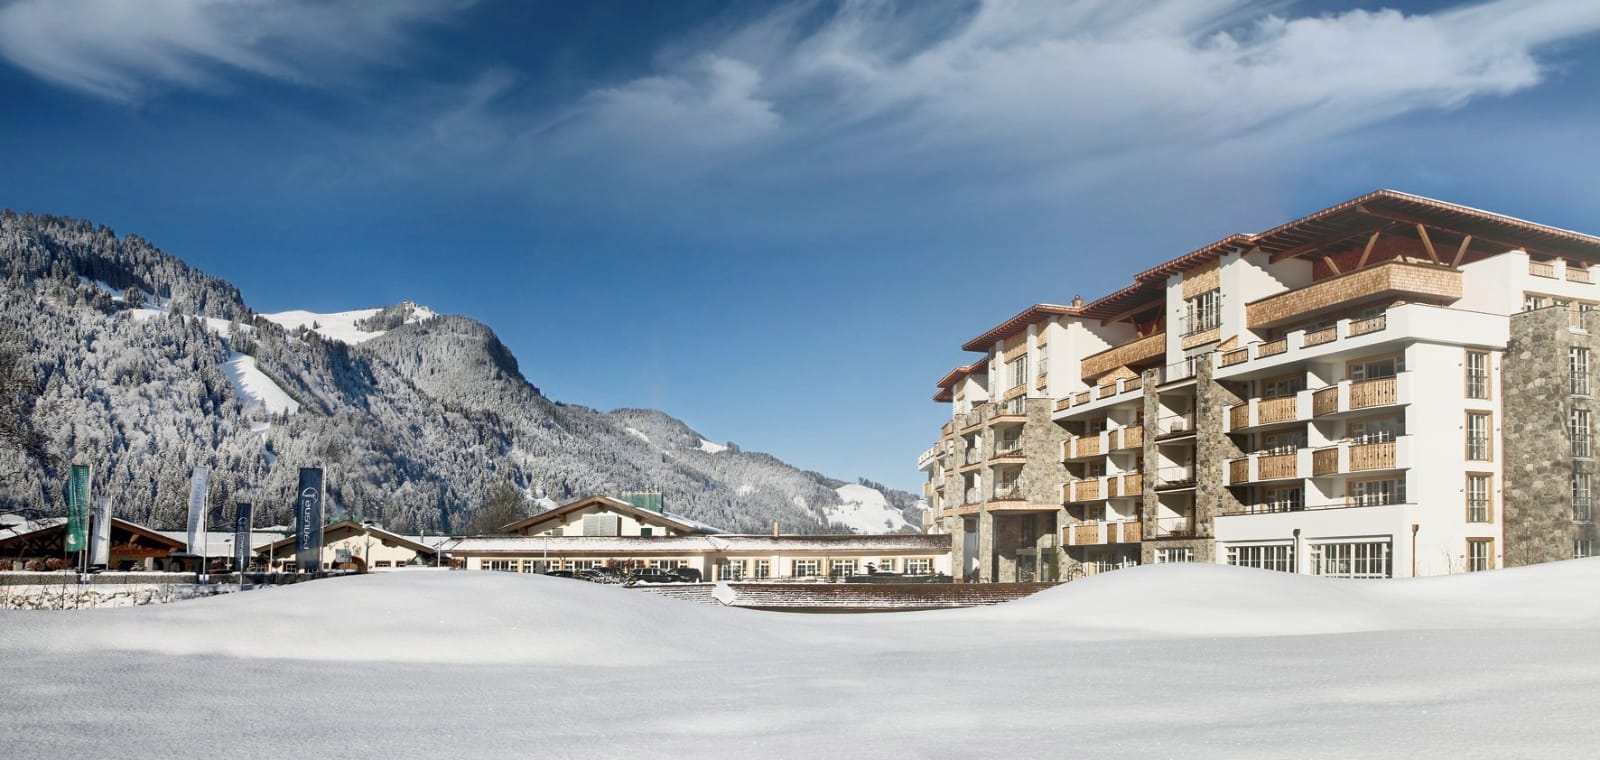 The Luxury Hotel in snowy Kitzbühel